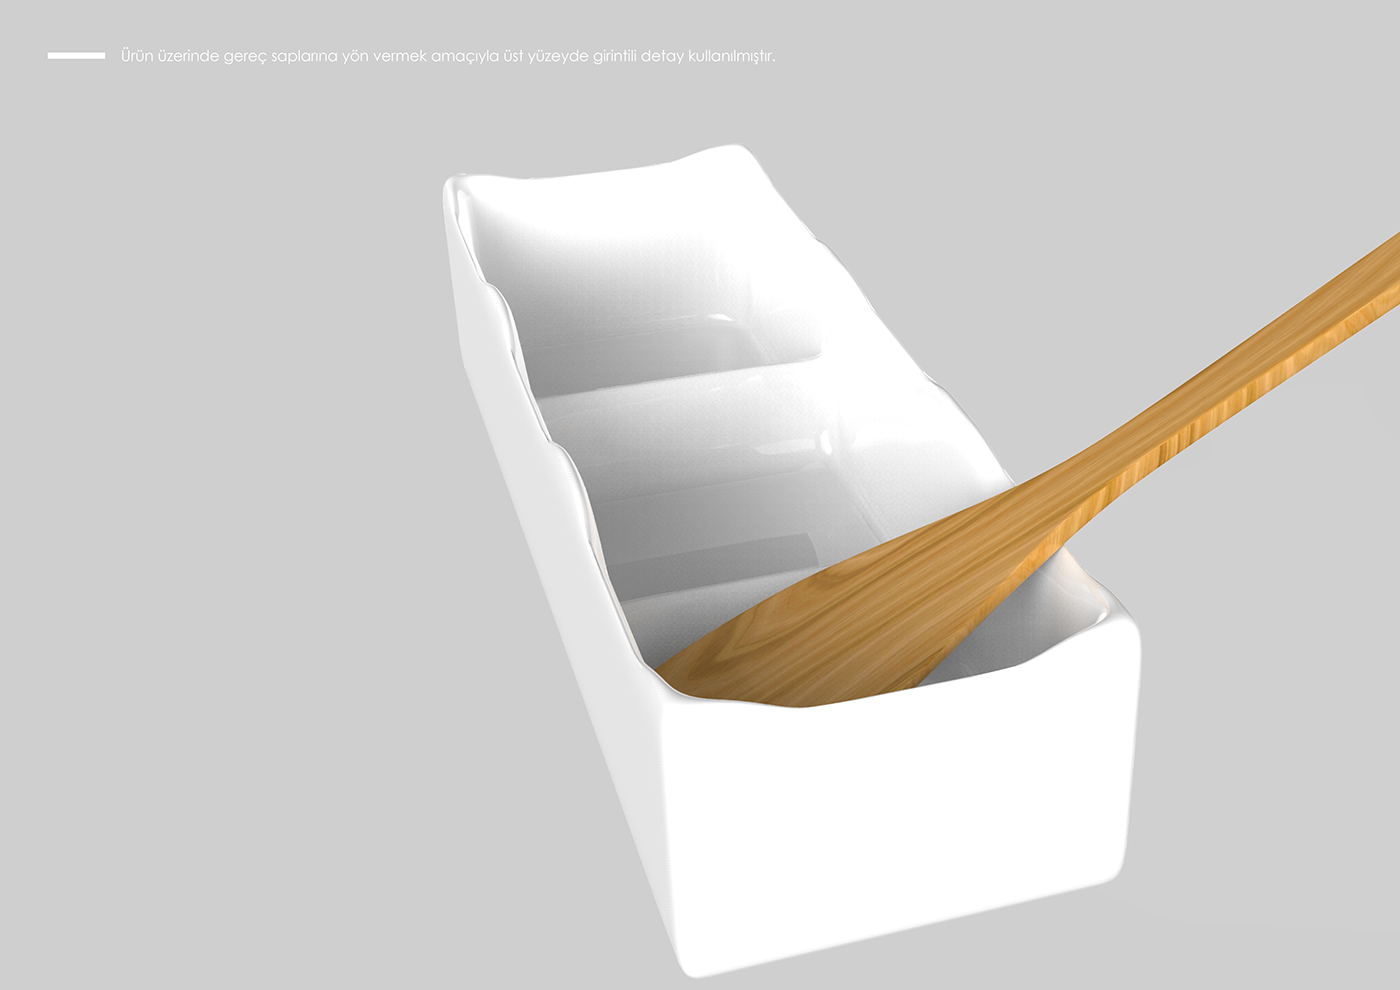 KitchenTools spoon packing porcelain productdesign design kutahya Porselen kirlikaşıklık universaldesign